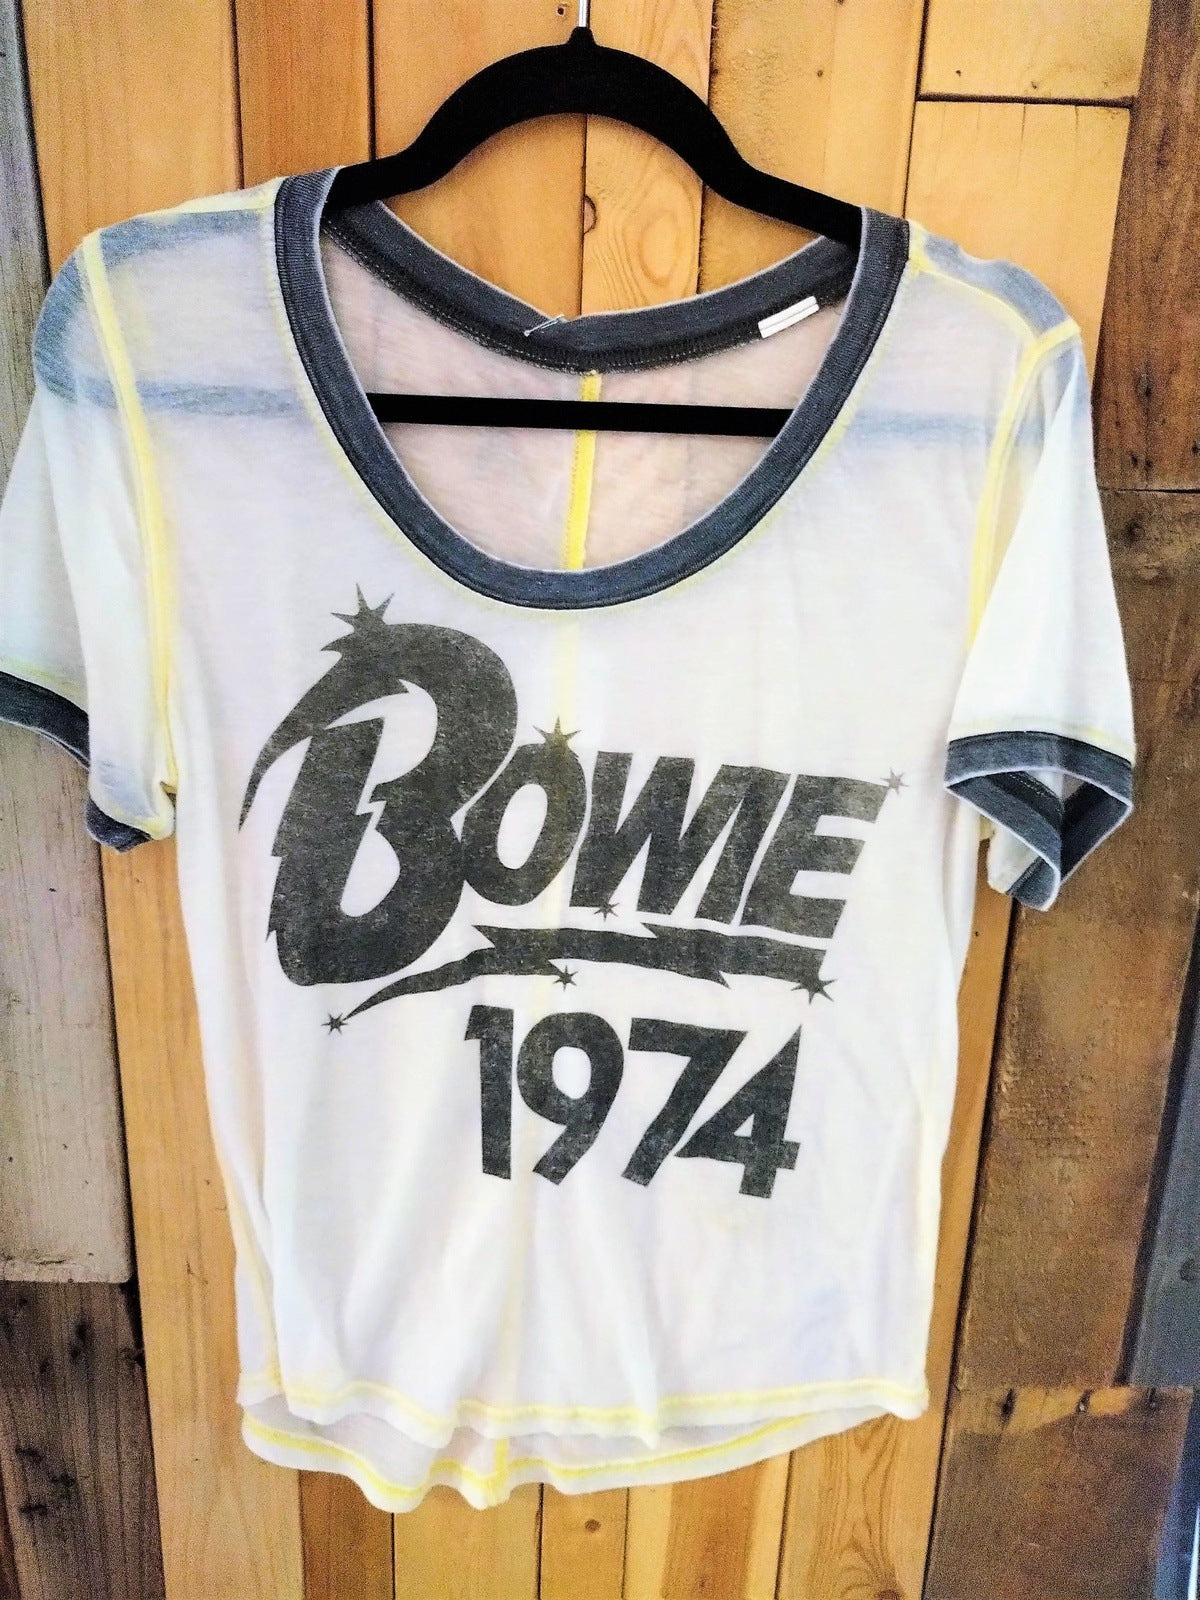 Bowie 1974 Women's Sheer Tee Shirt Size Large